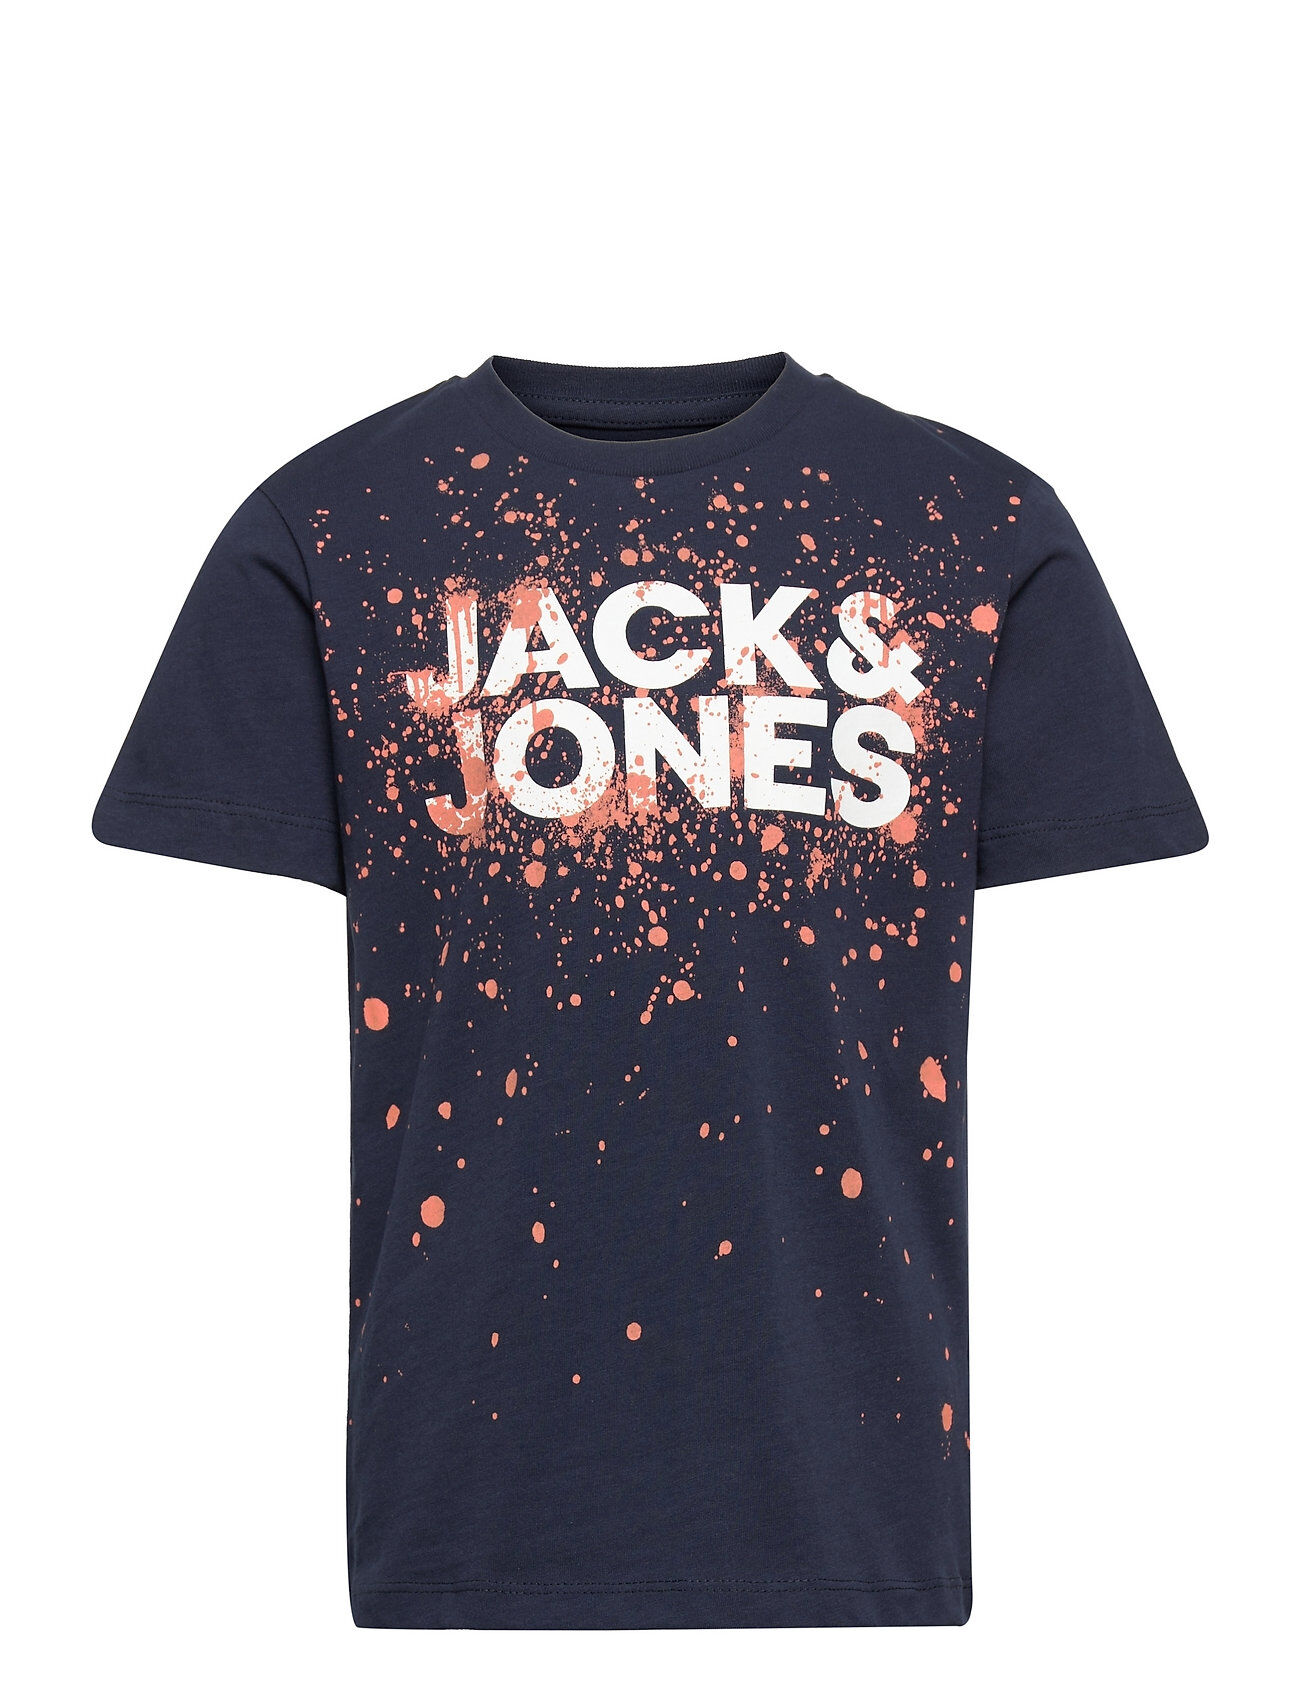 Jack & Jones Jjnew Splash Tee Ss Jr T-shirts Short-sleeved Blå Jack & J S